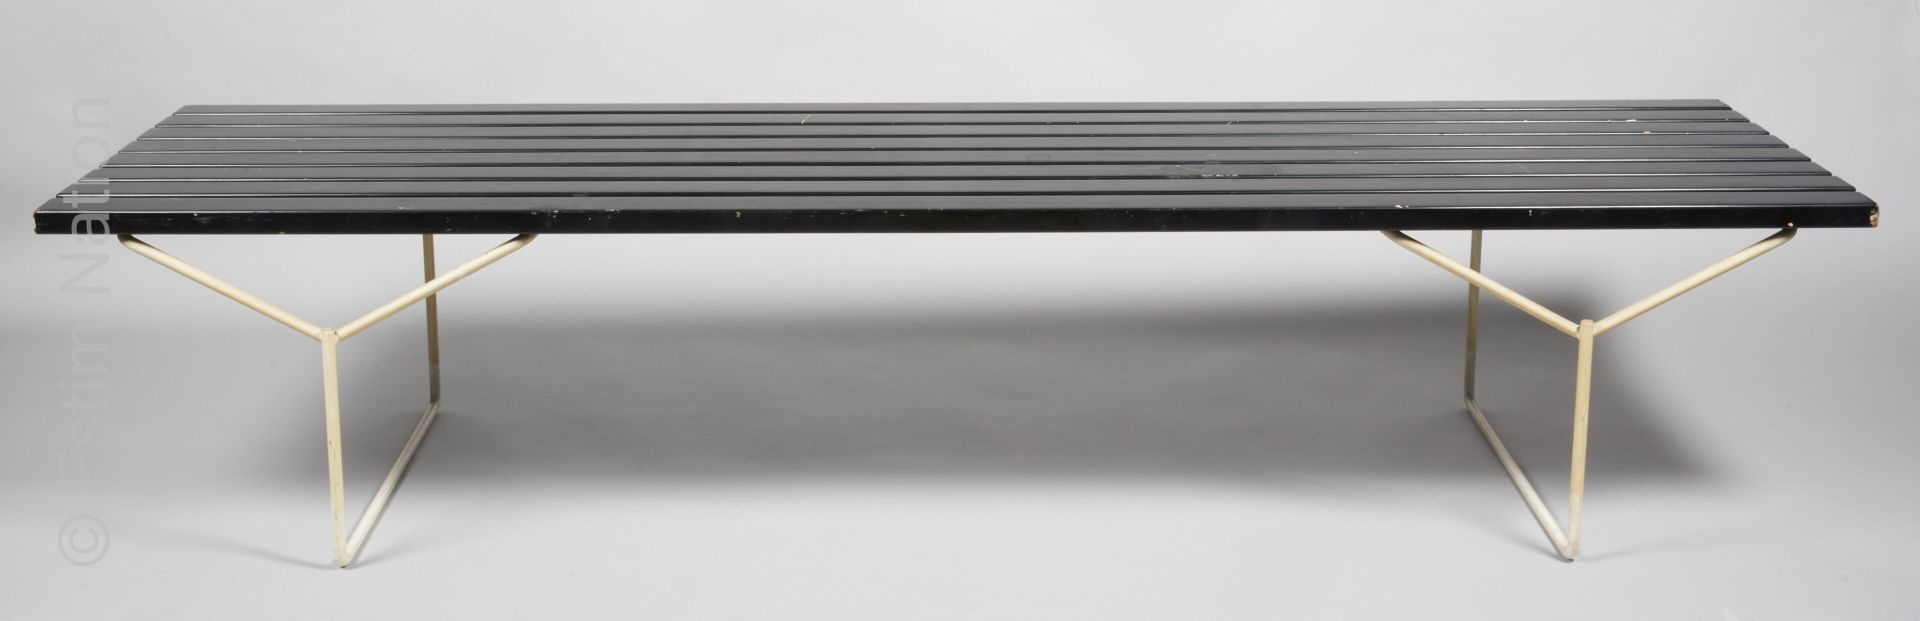 DESIGN - BERTIOA 哈利-贝尔蒂奥(1915-1978)



400 YC型长椅，座椅为黑色漆面木质八条板条，Y型底座为乳白色漆面金属。

约1&hellip;